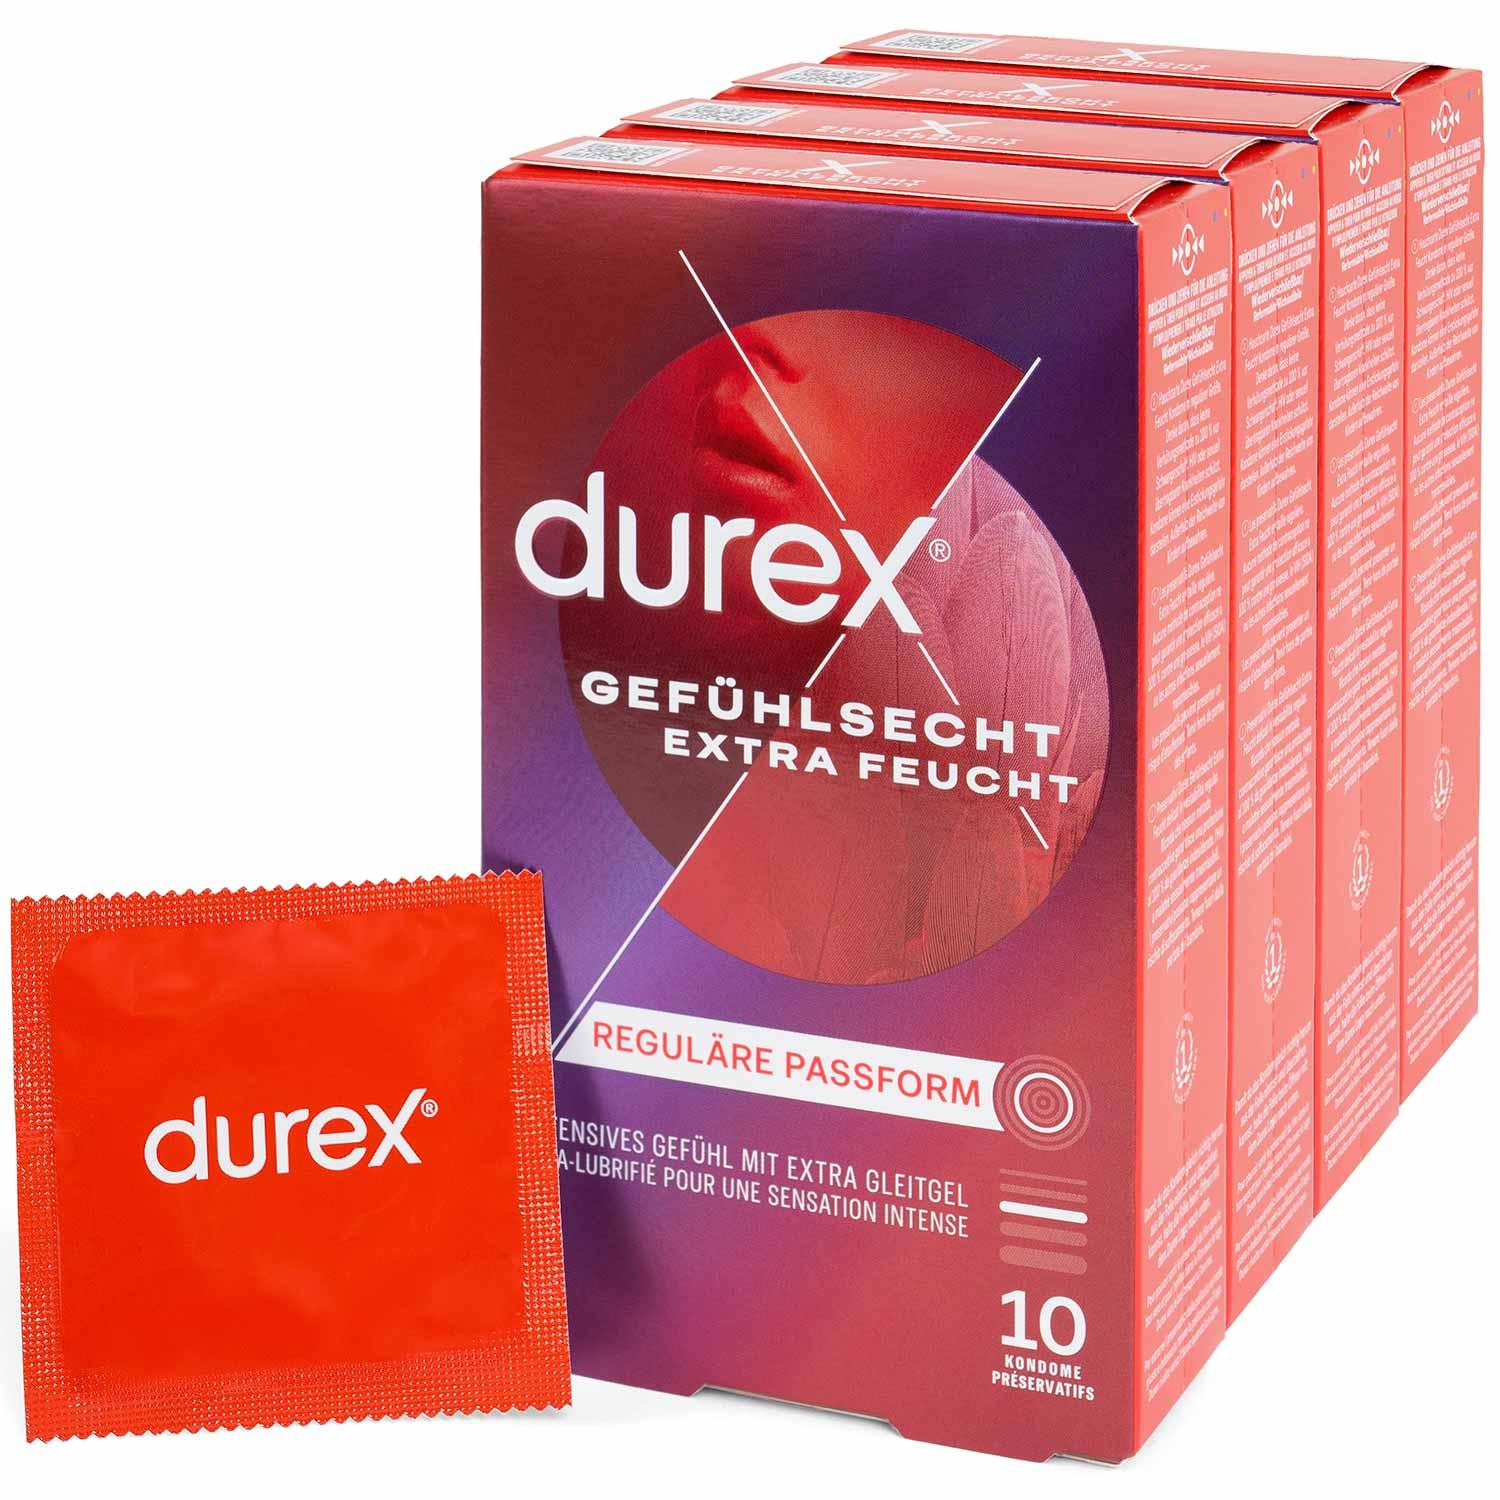 Durex Gefühlsecht Extra Feucht Condoms 10pcs, with Reservoir, Extra Lubrication, Ø 56mm, 195mm